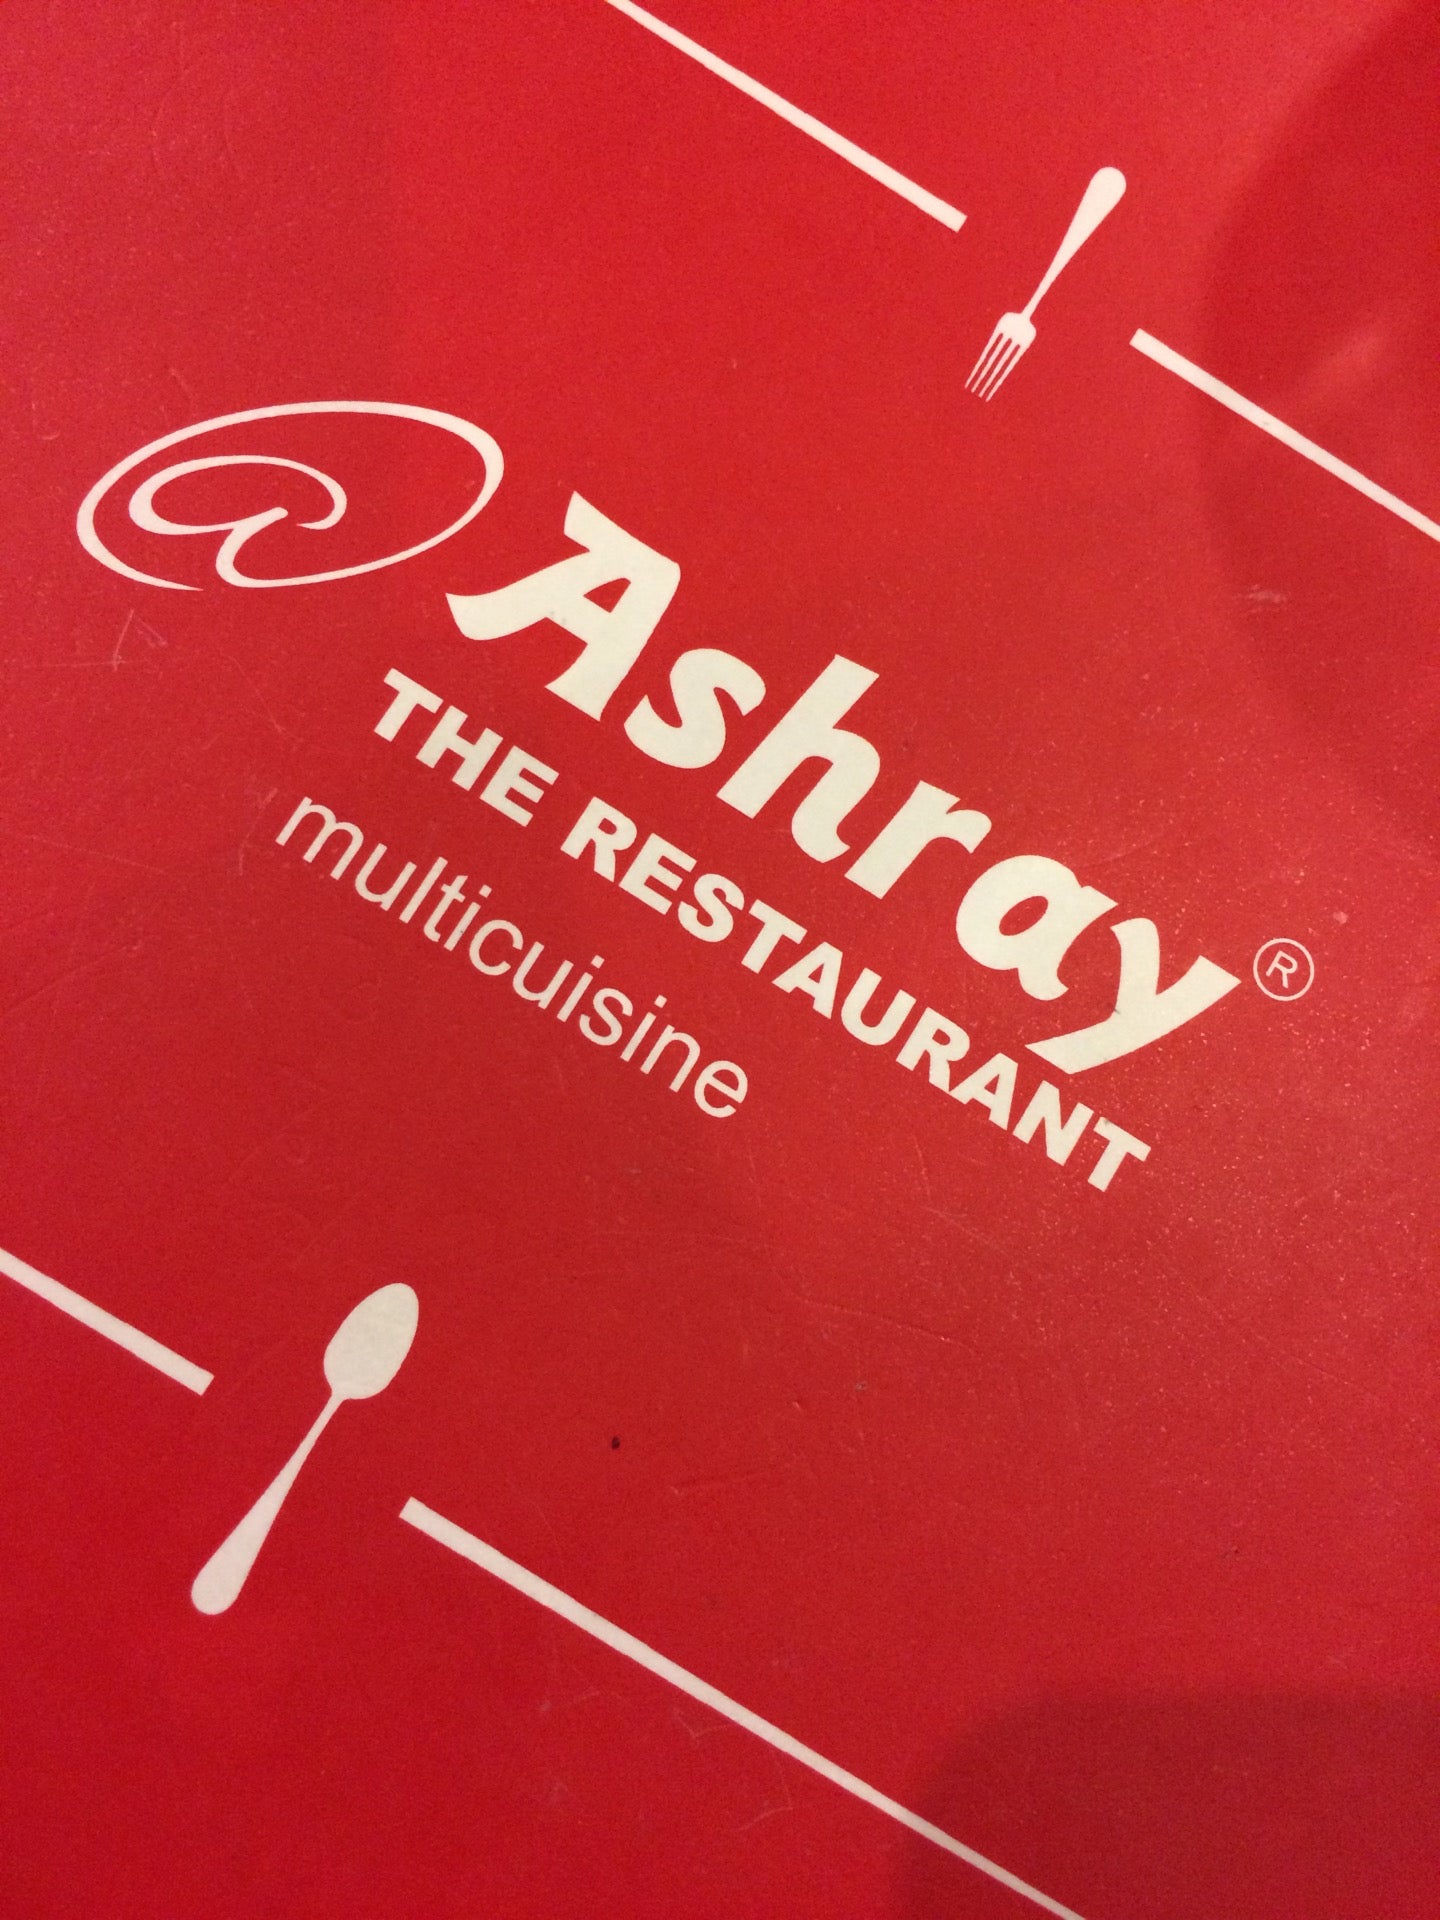 Ashray Restaurant